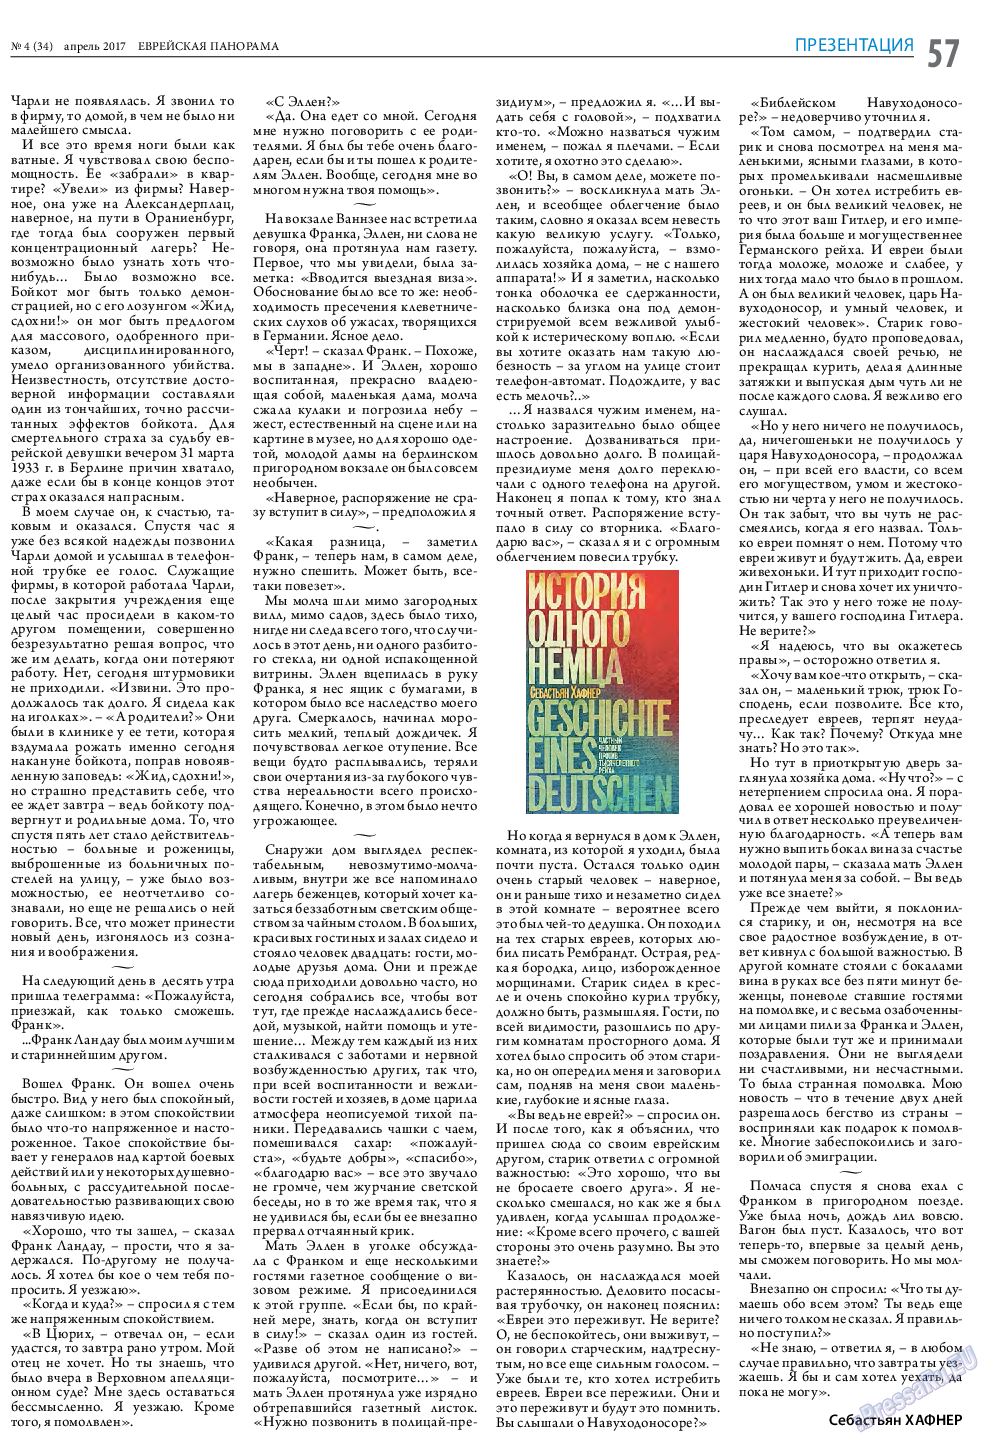 Еврейская панорама, газета. 2017 №4 стр.57